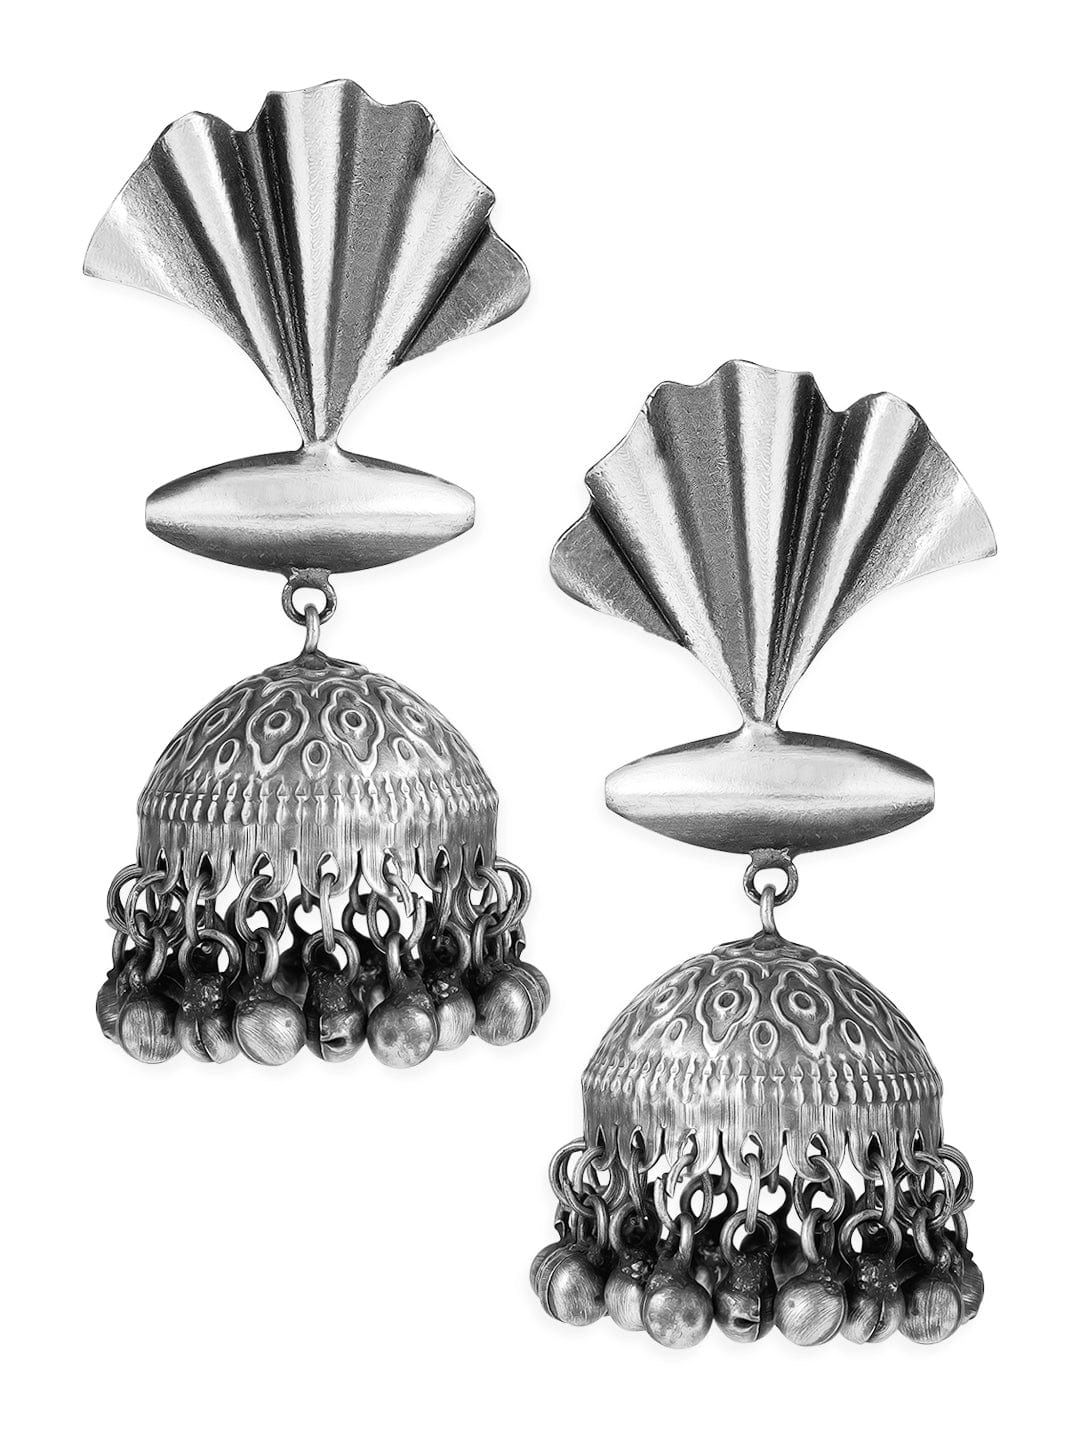 Jhumka Earrings Small Jhumki earrings South Indian Jewelry Dangle Earrings  gift — Discovered